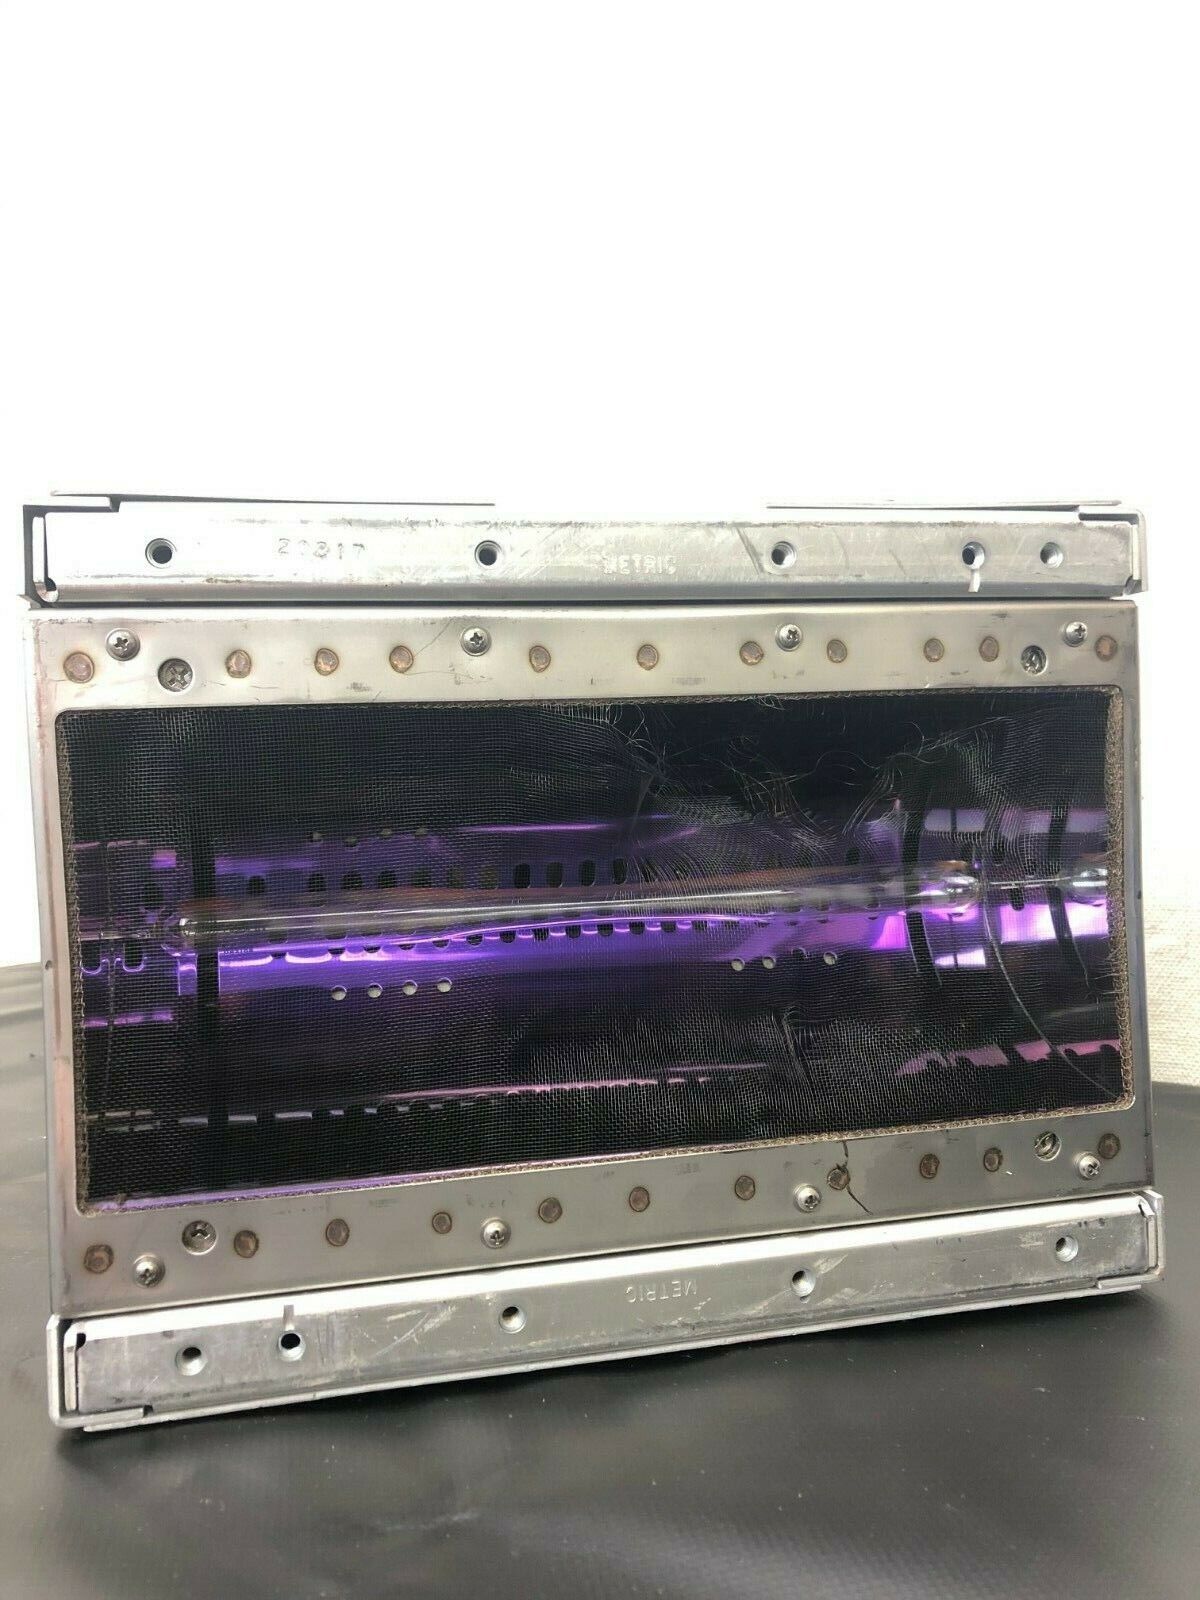 Fusion UV Light Hammer Irradiator LH10 Fusion UV Systems, Inc. Does Not Apply - фотография #4